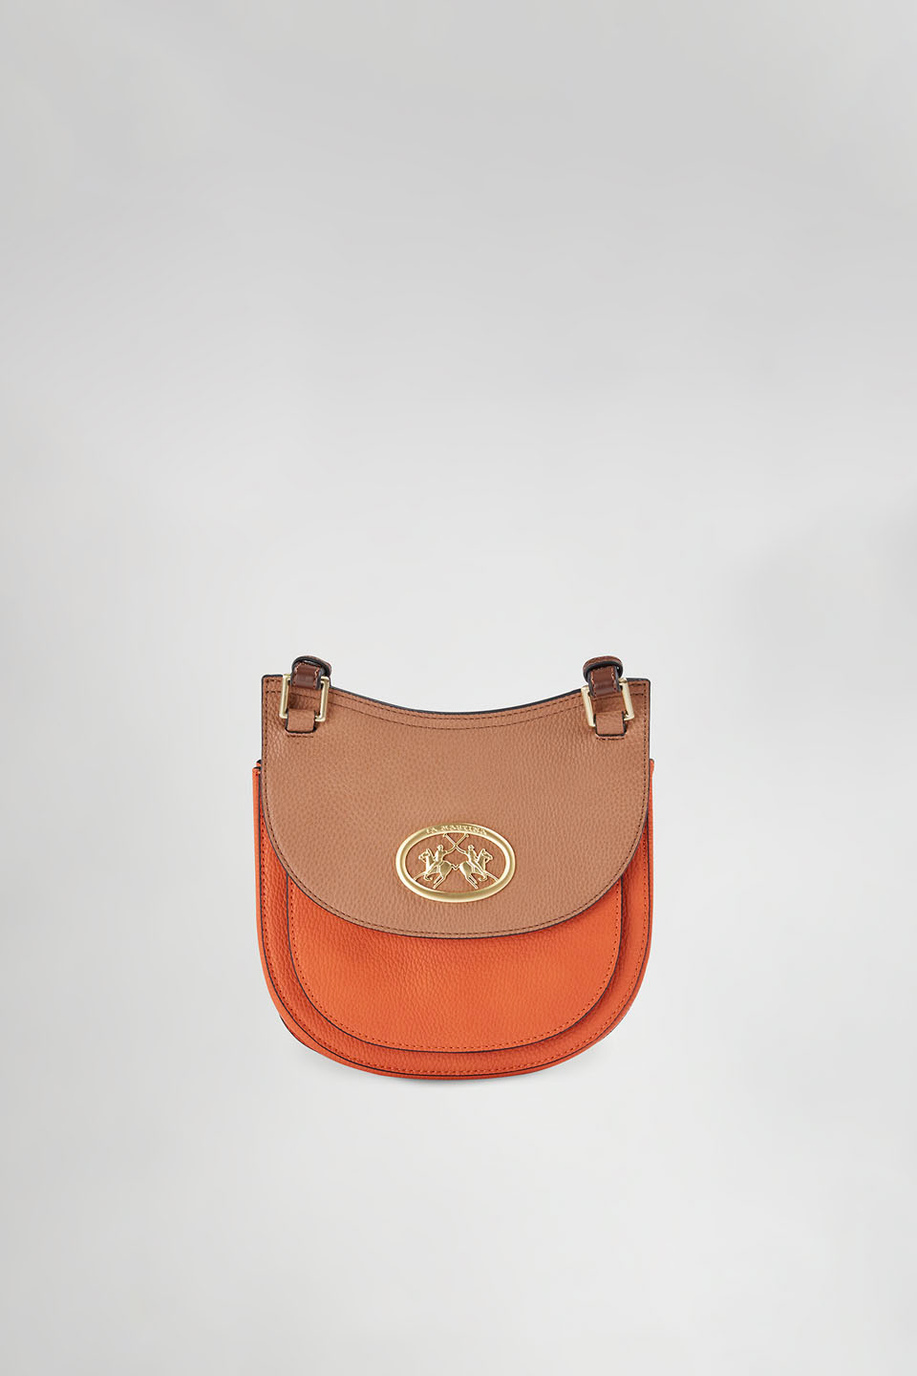 PU leather bag - Summer must-haves | La Martina - Official Online Shop